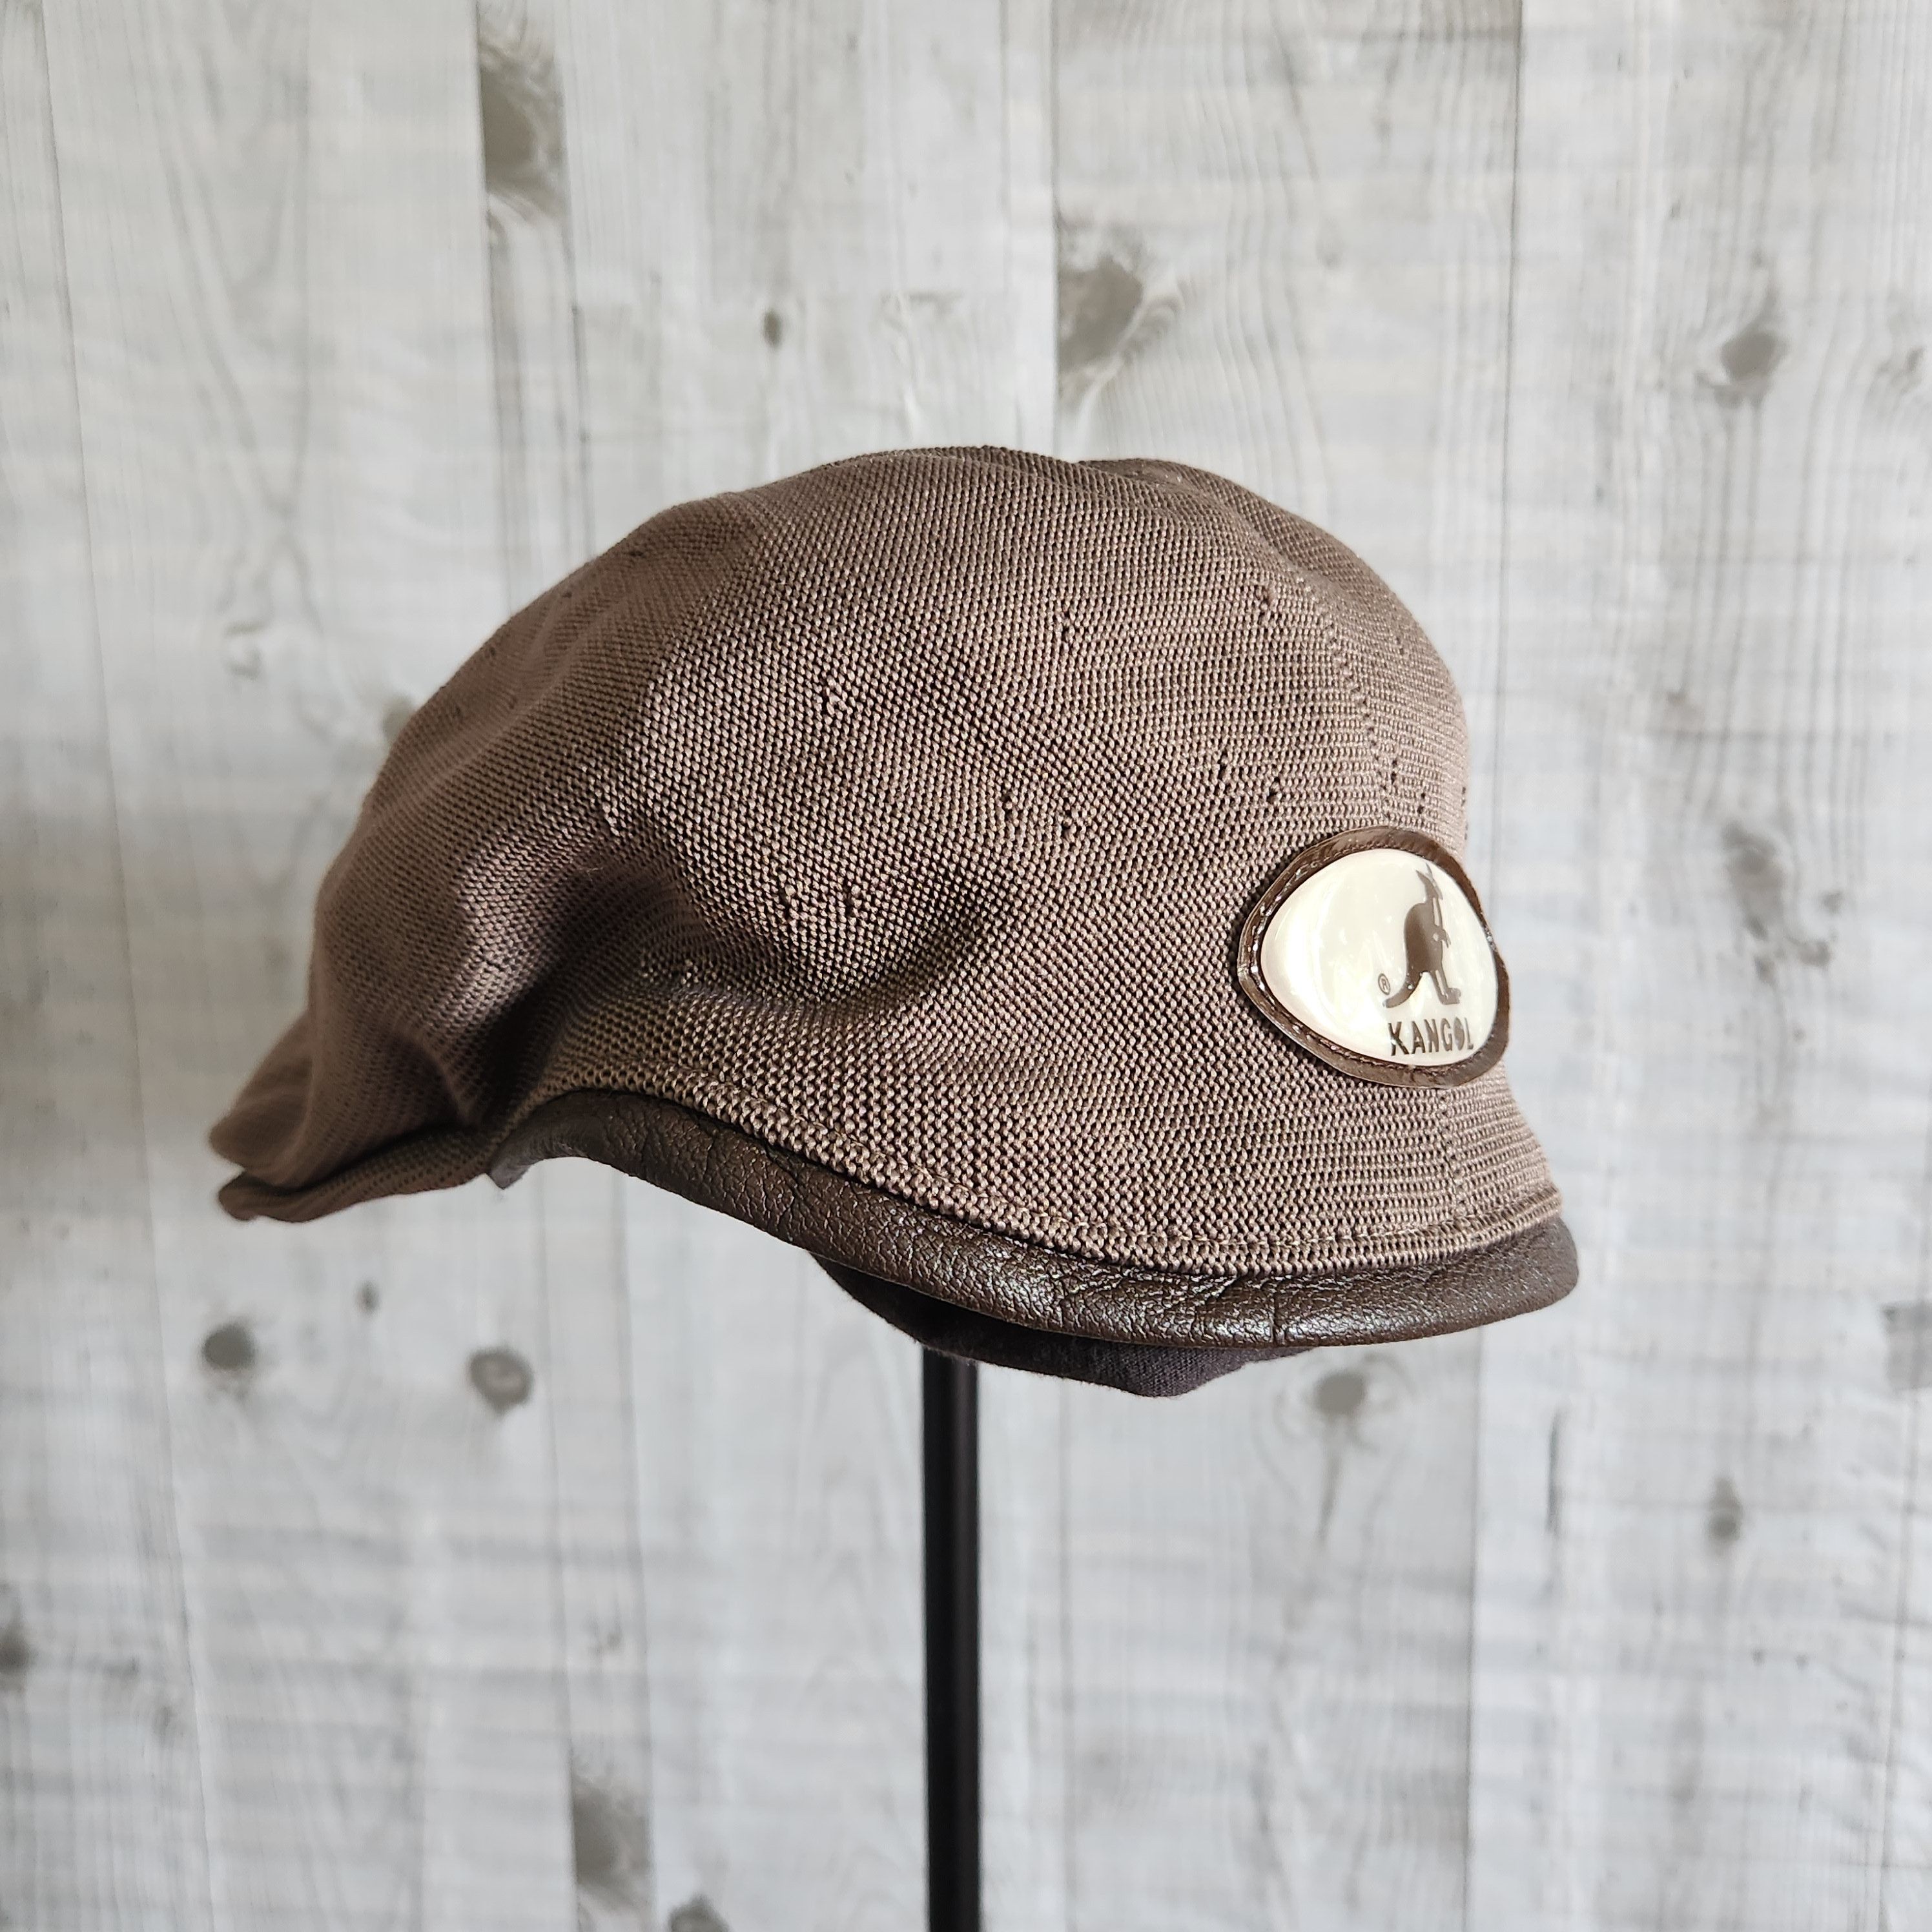 Vintage Kangol Ivy Cap / Flat Cap Size Large - 1